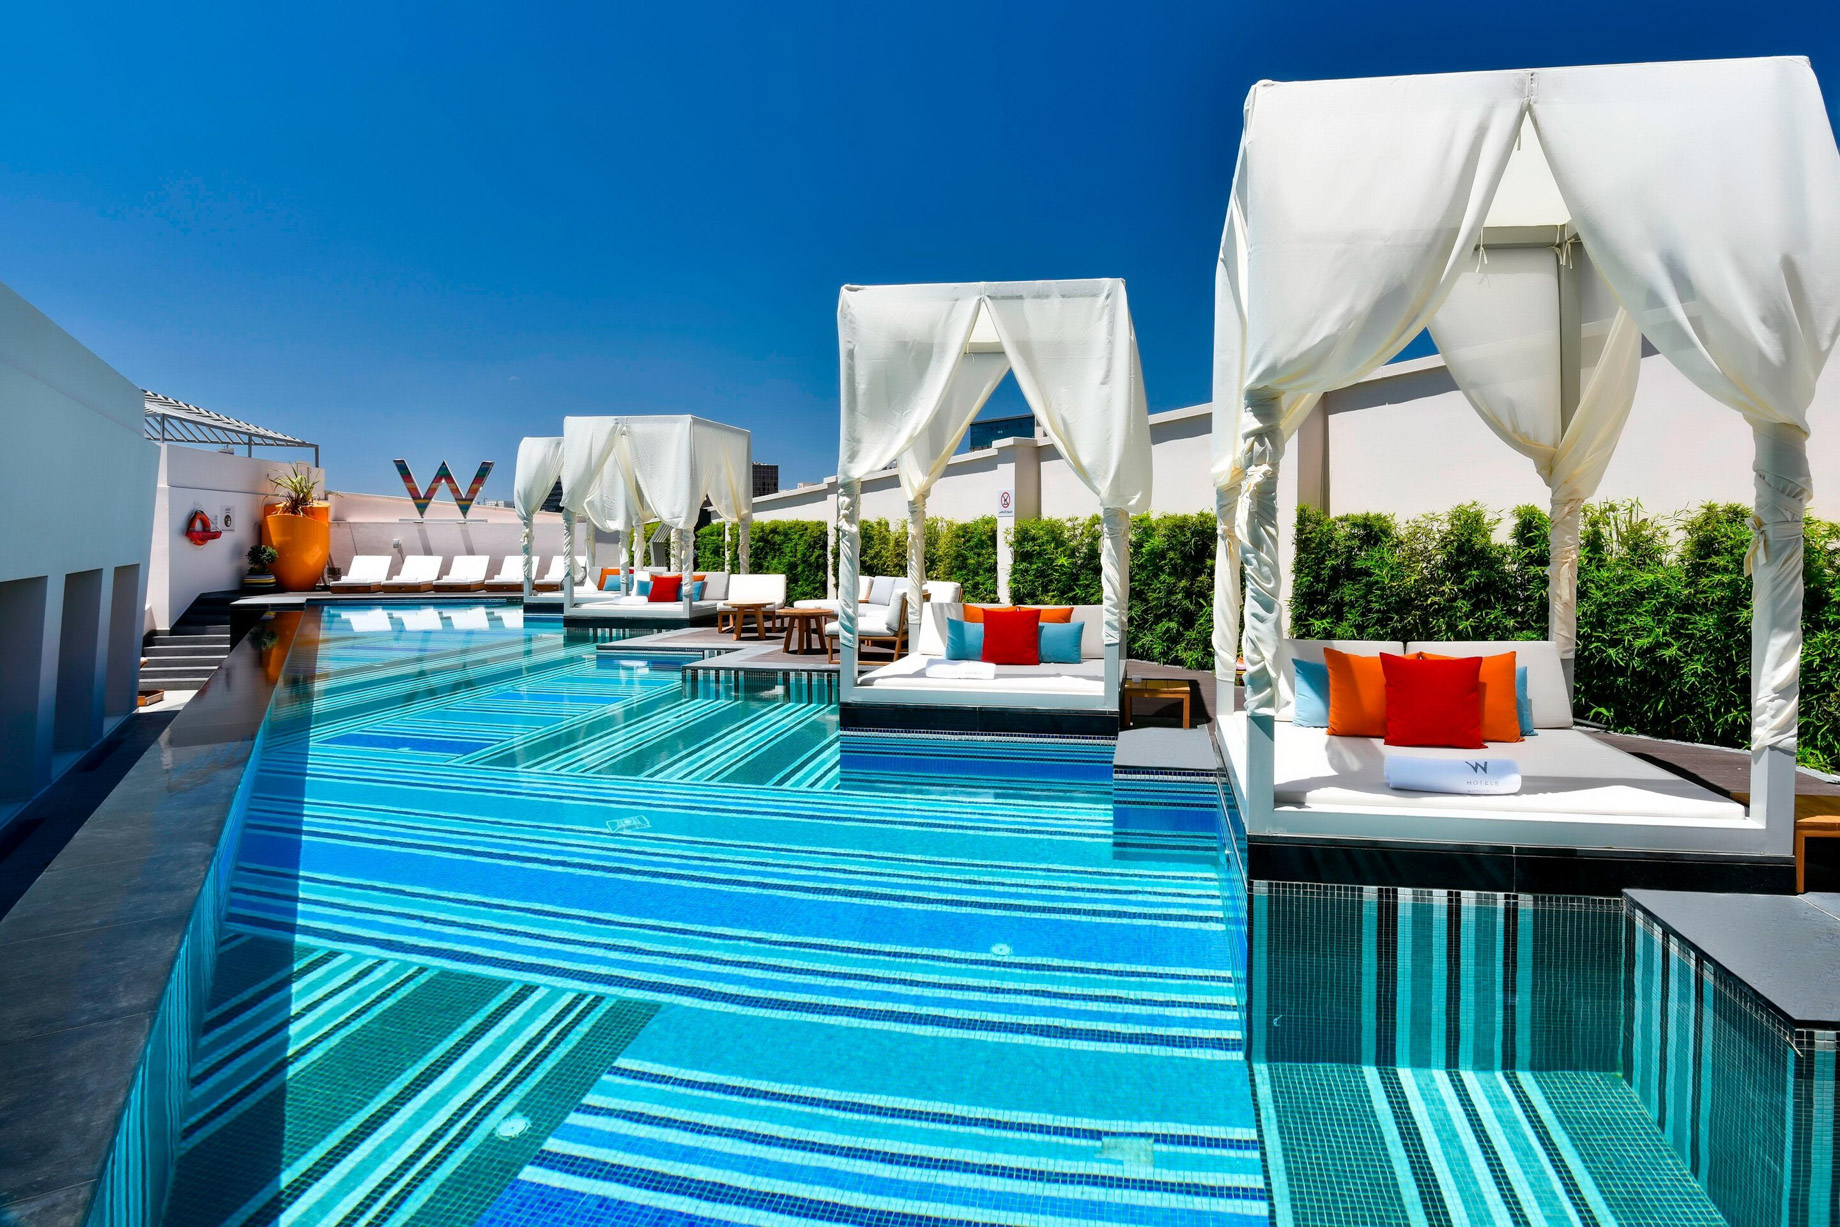 W Amman Hotel – Amman, Jordan – WET Outdoor Pool Cabanas